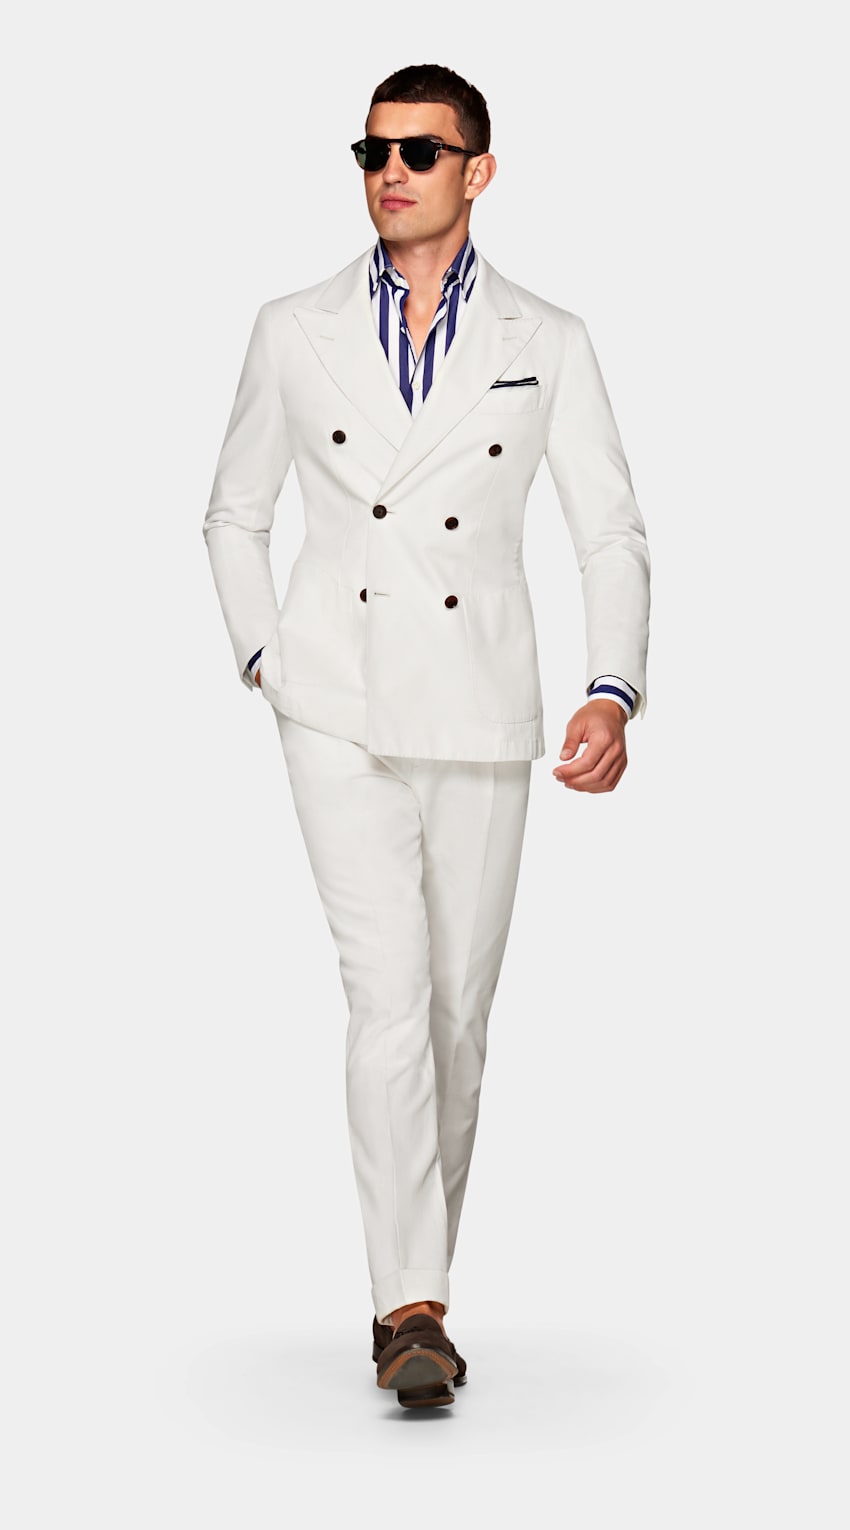 SUITSUPPLY  - Subalpino, Italie Jort Off White Suit